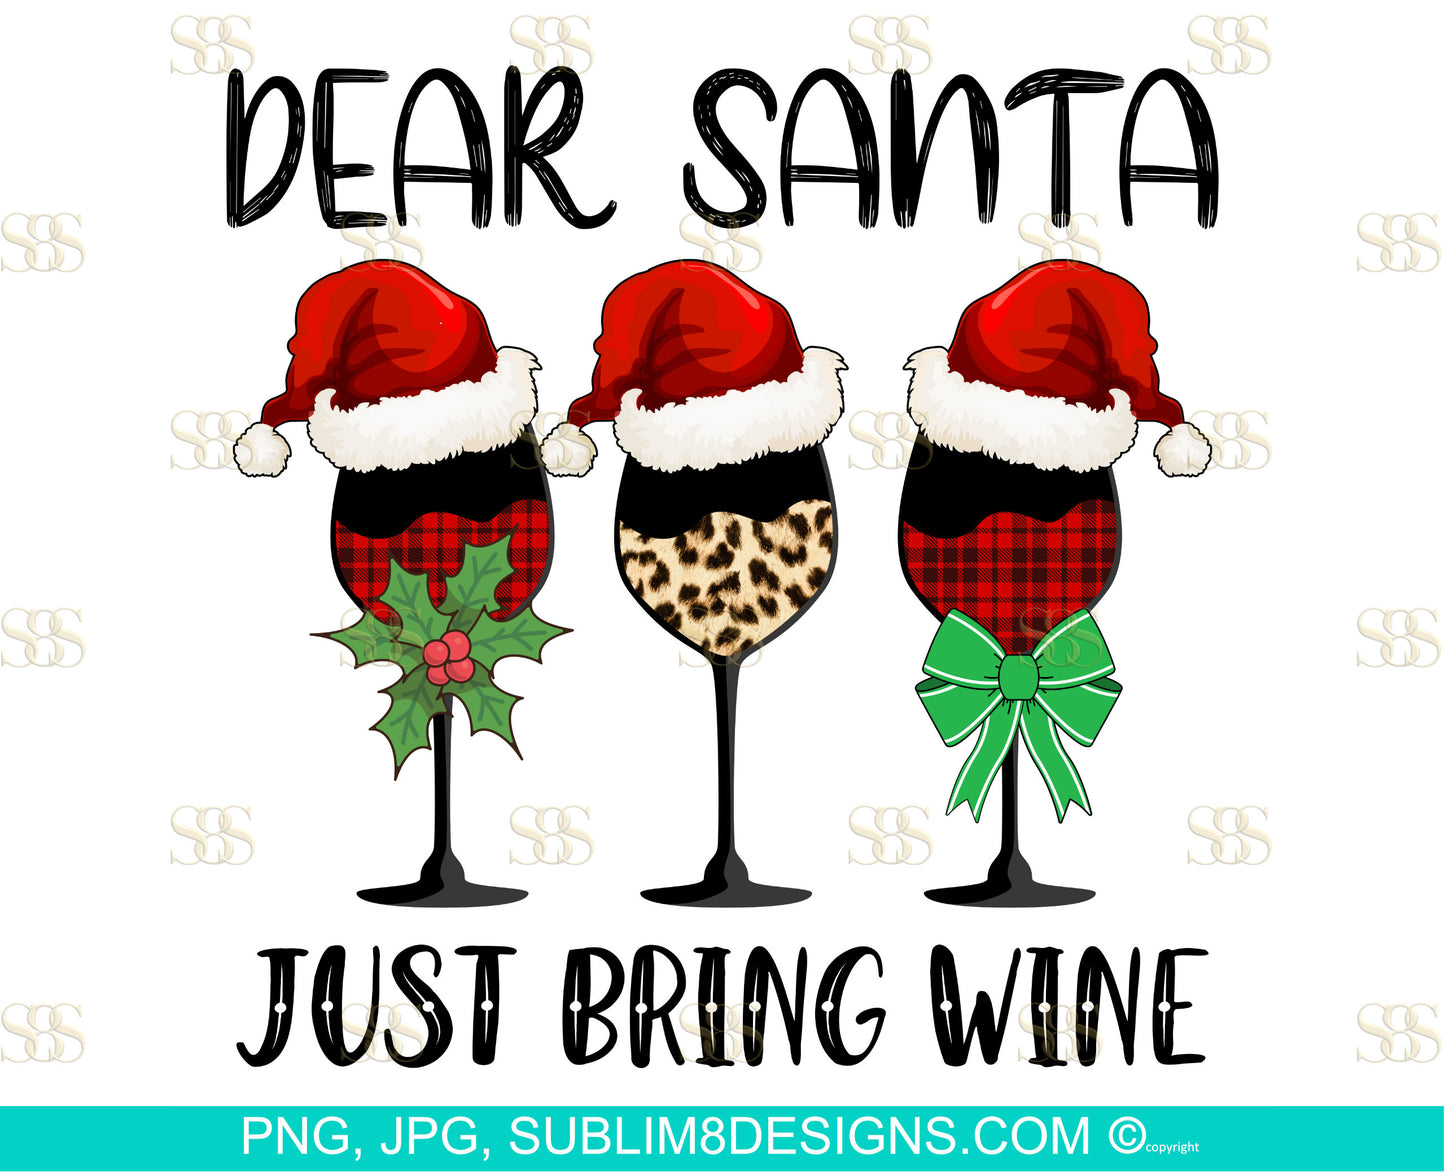 Dear Santa Just Bring Wine